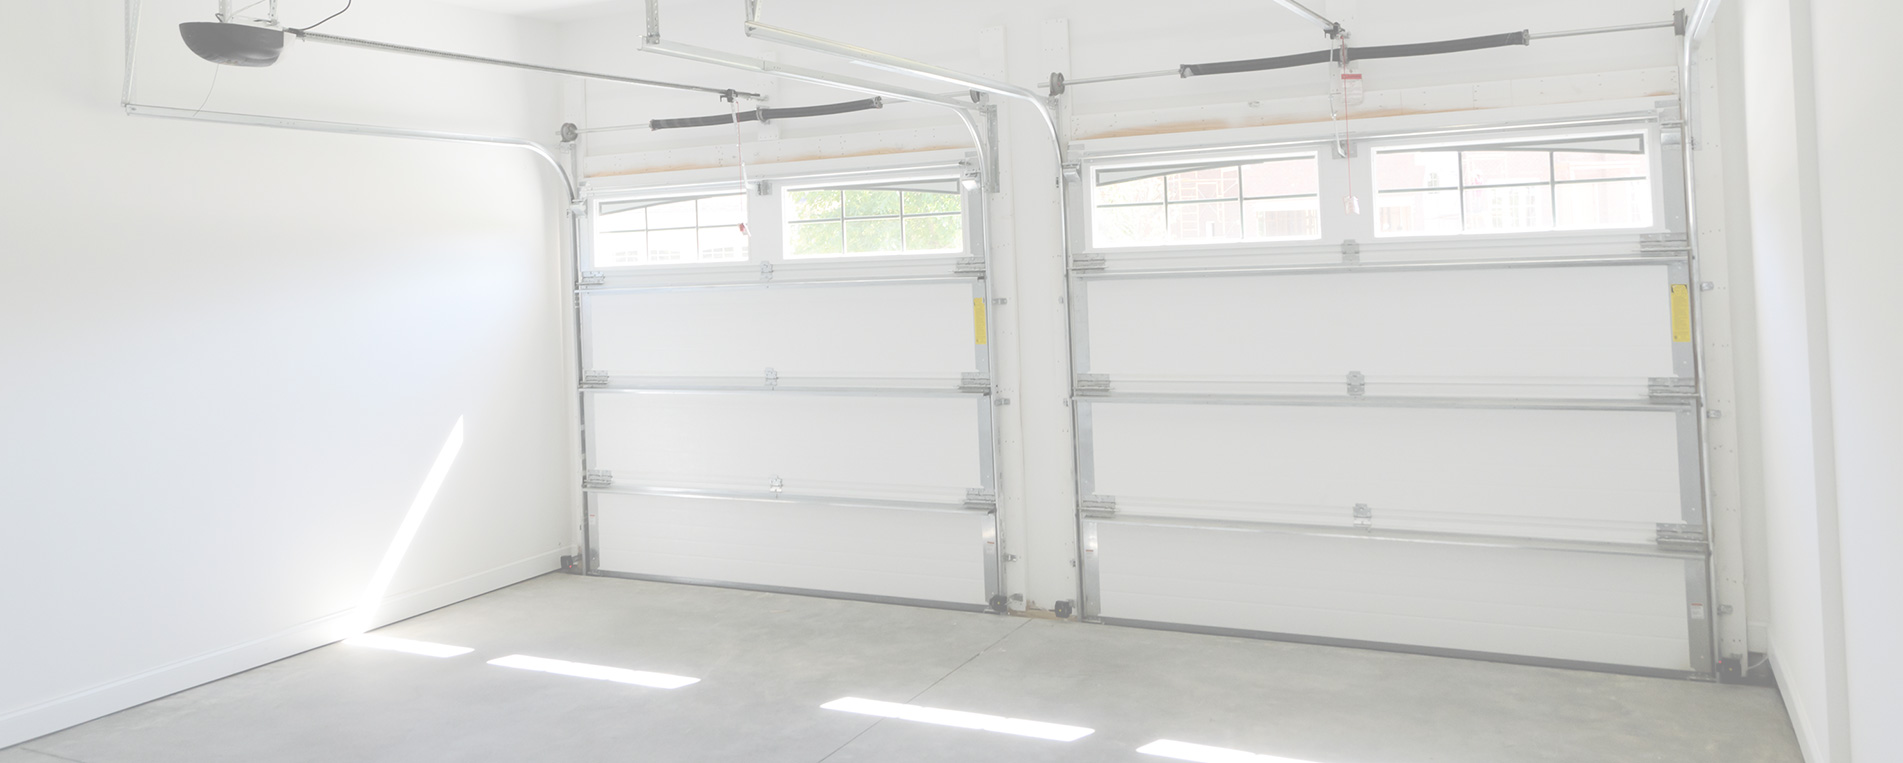 Insightful Garage Door Repair Spring Information